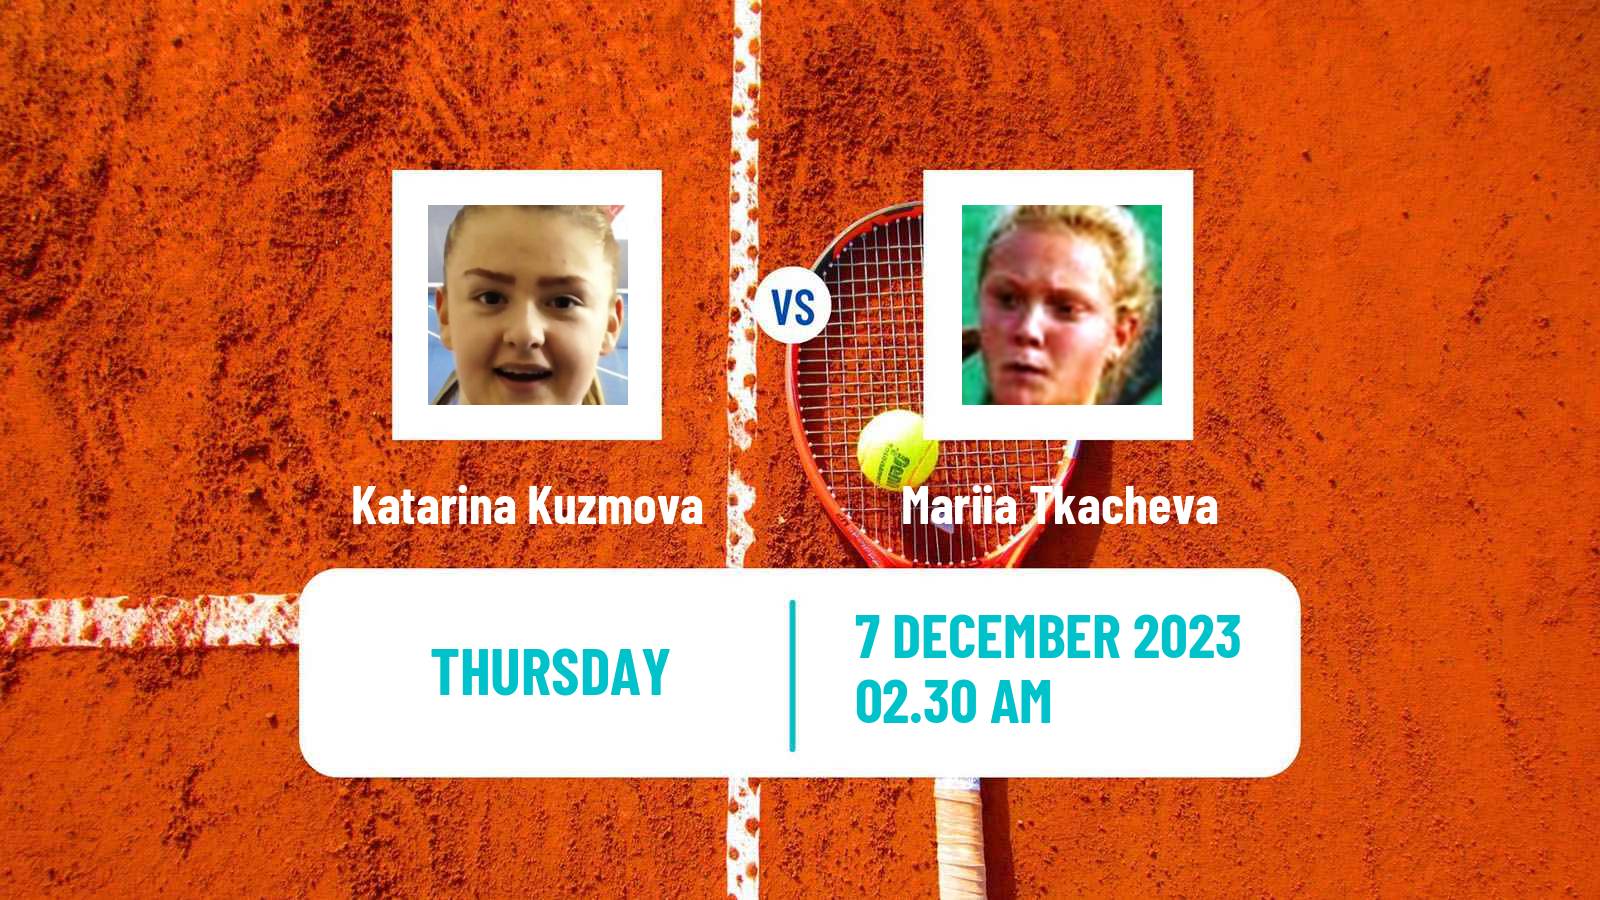 Tennis ITF W15 Sharm Elsheikh 21 Women Katarina Kuzmova - Mariia Tkacheva